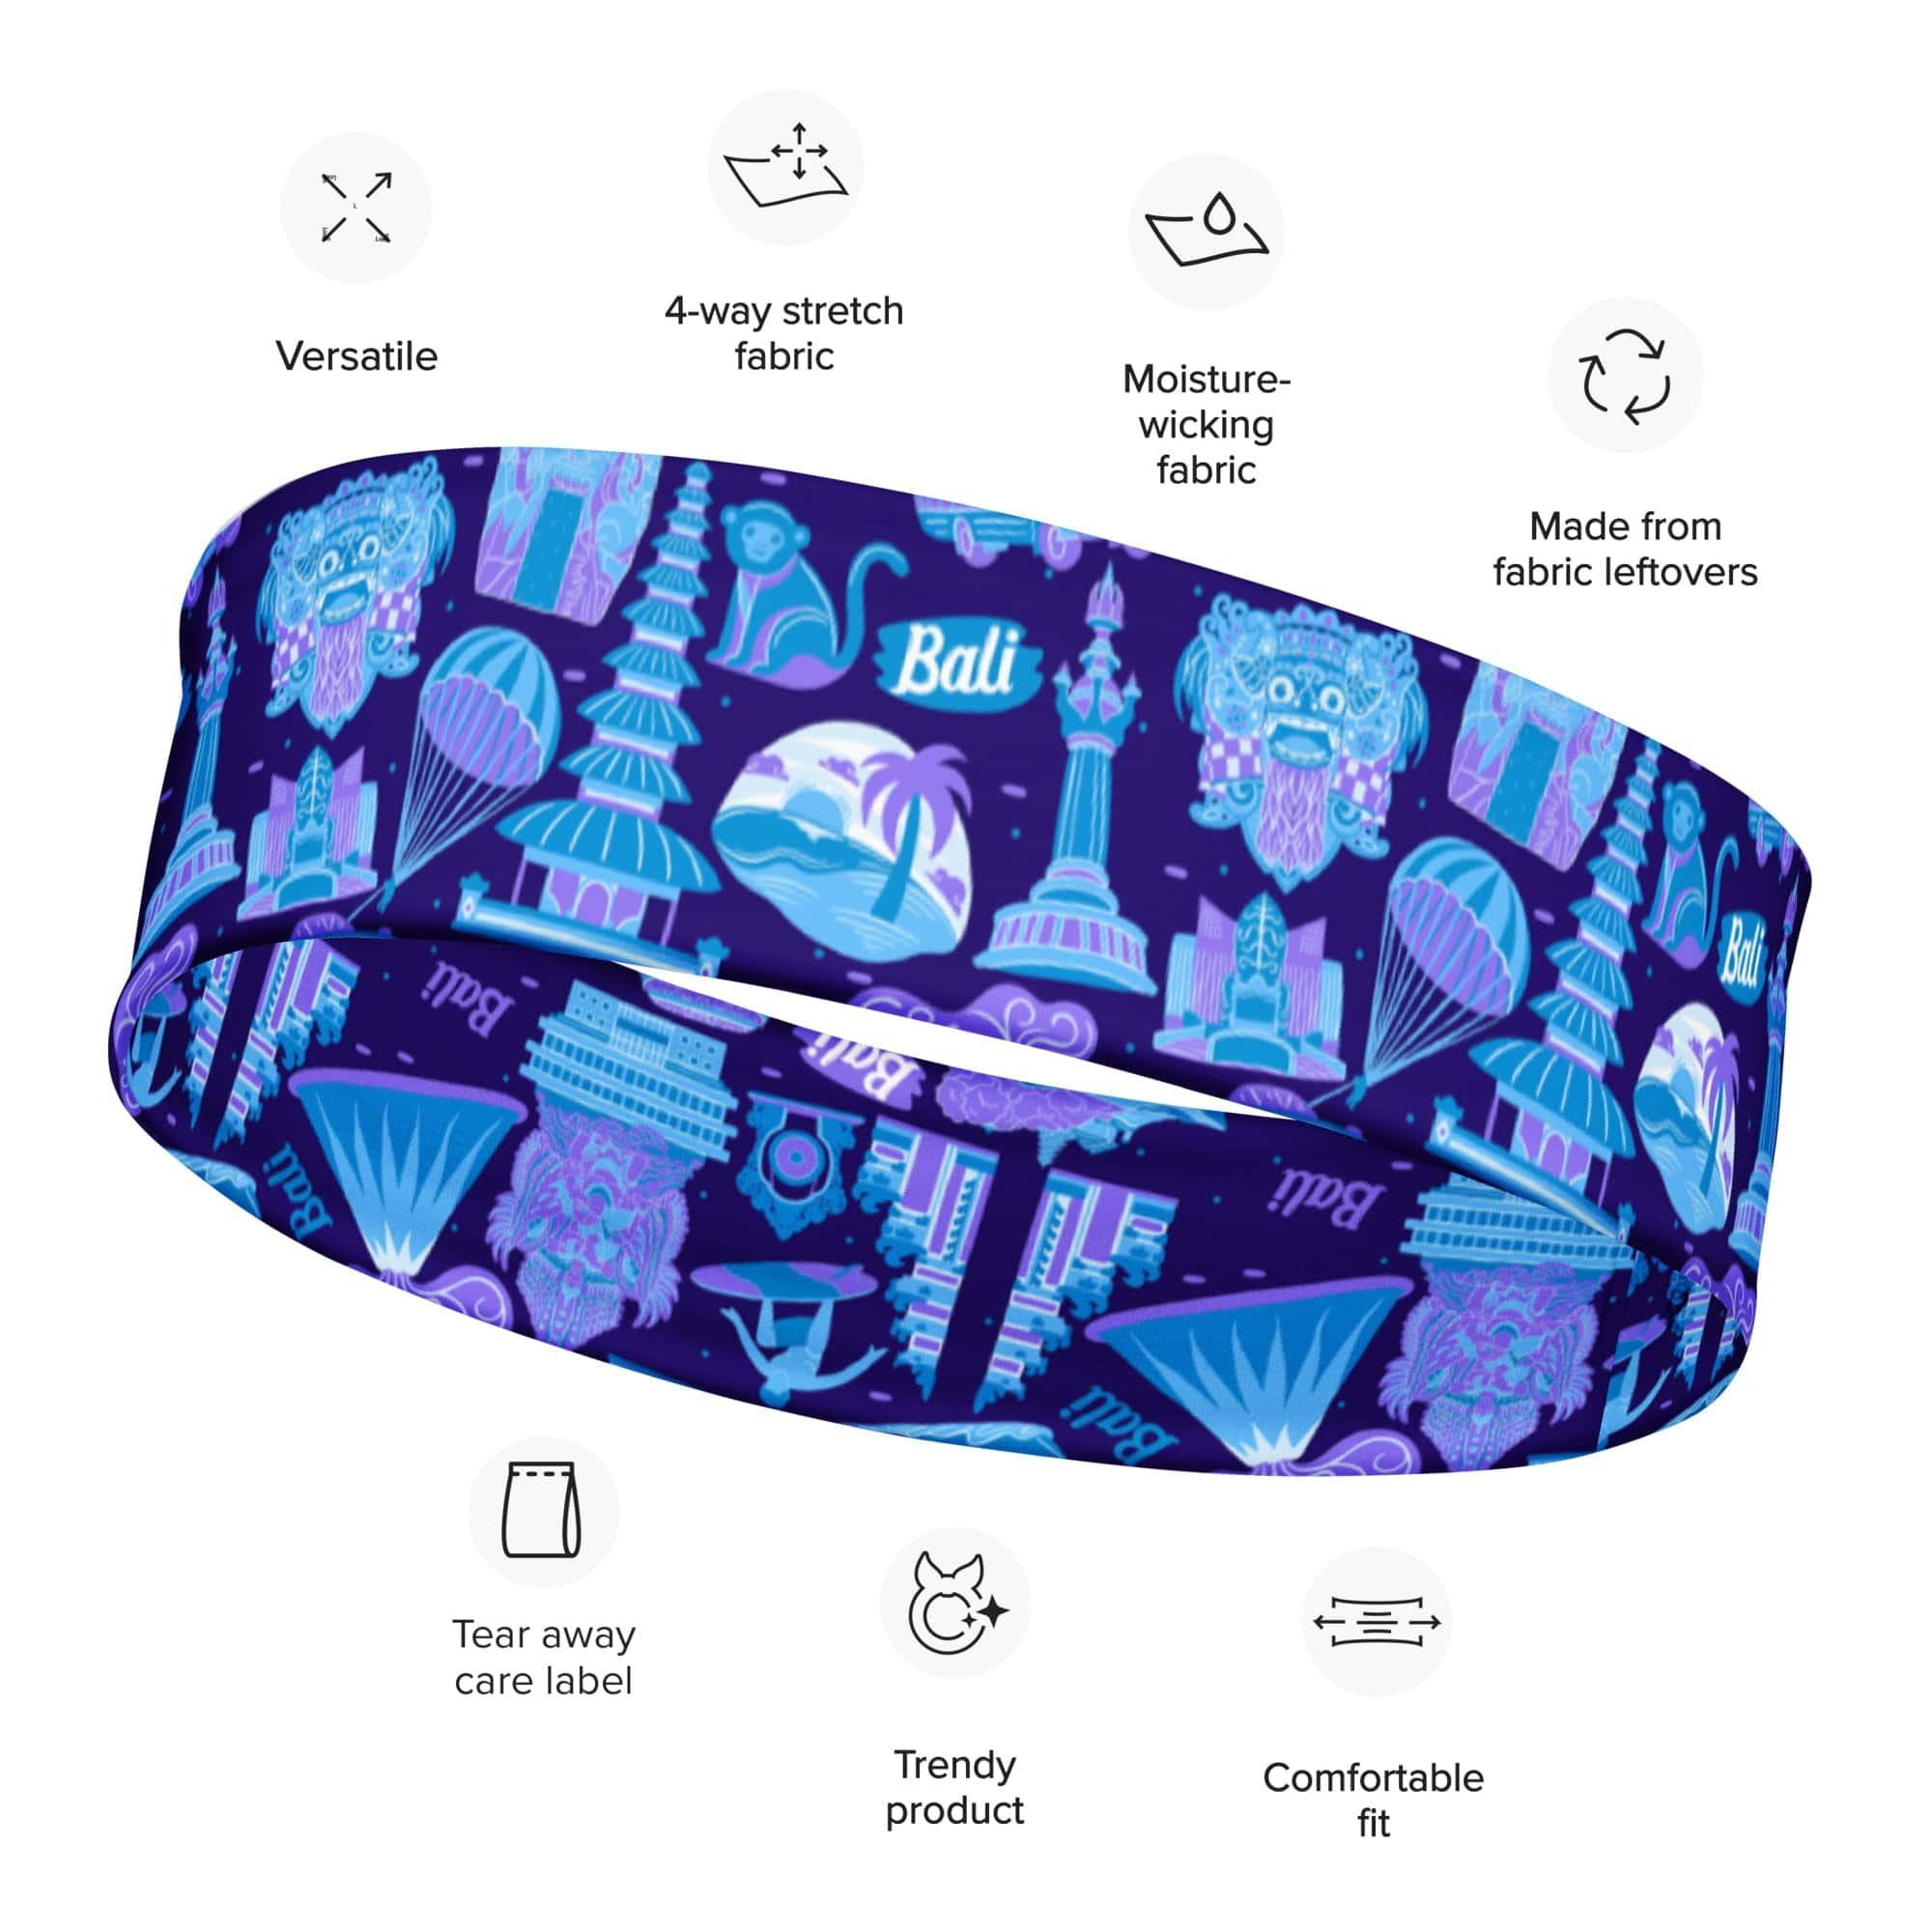 Bali Purple and Blue Quick Dry Stretch Headband - TopKoalaTee